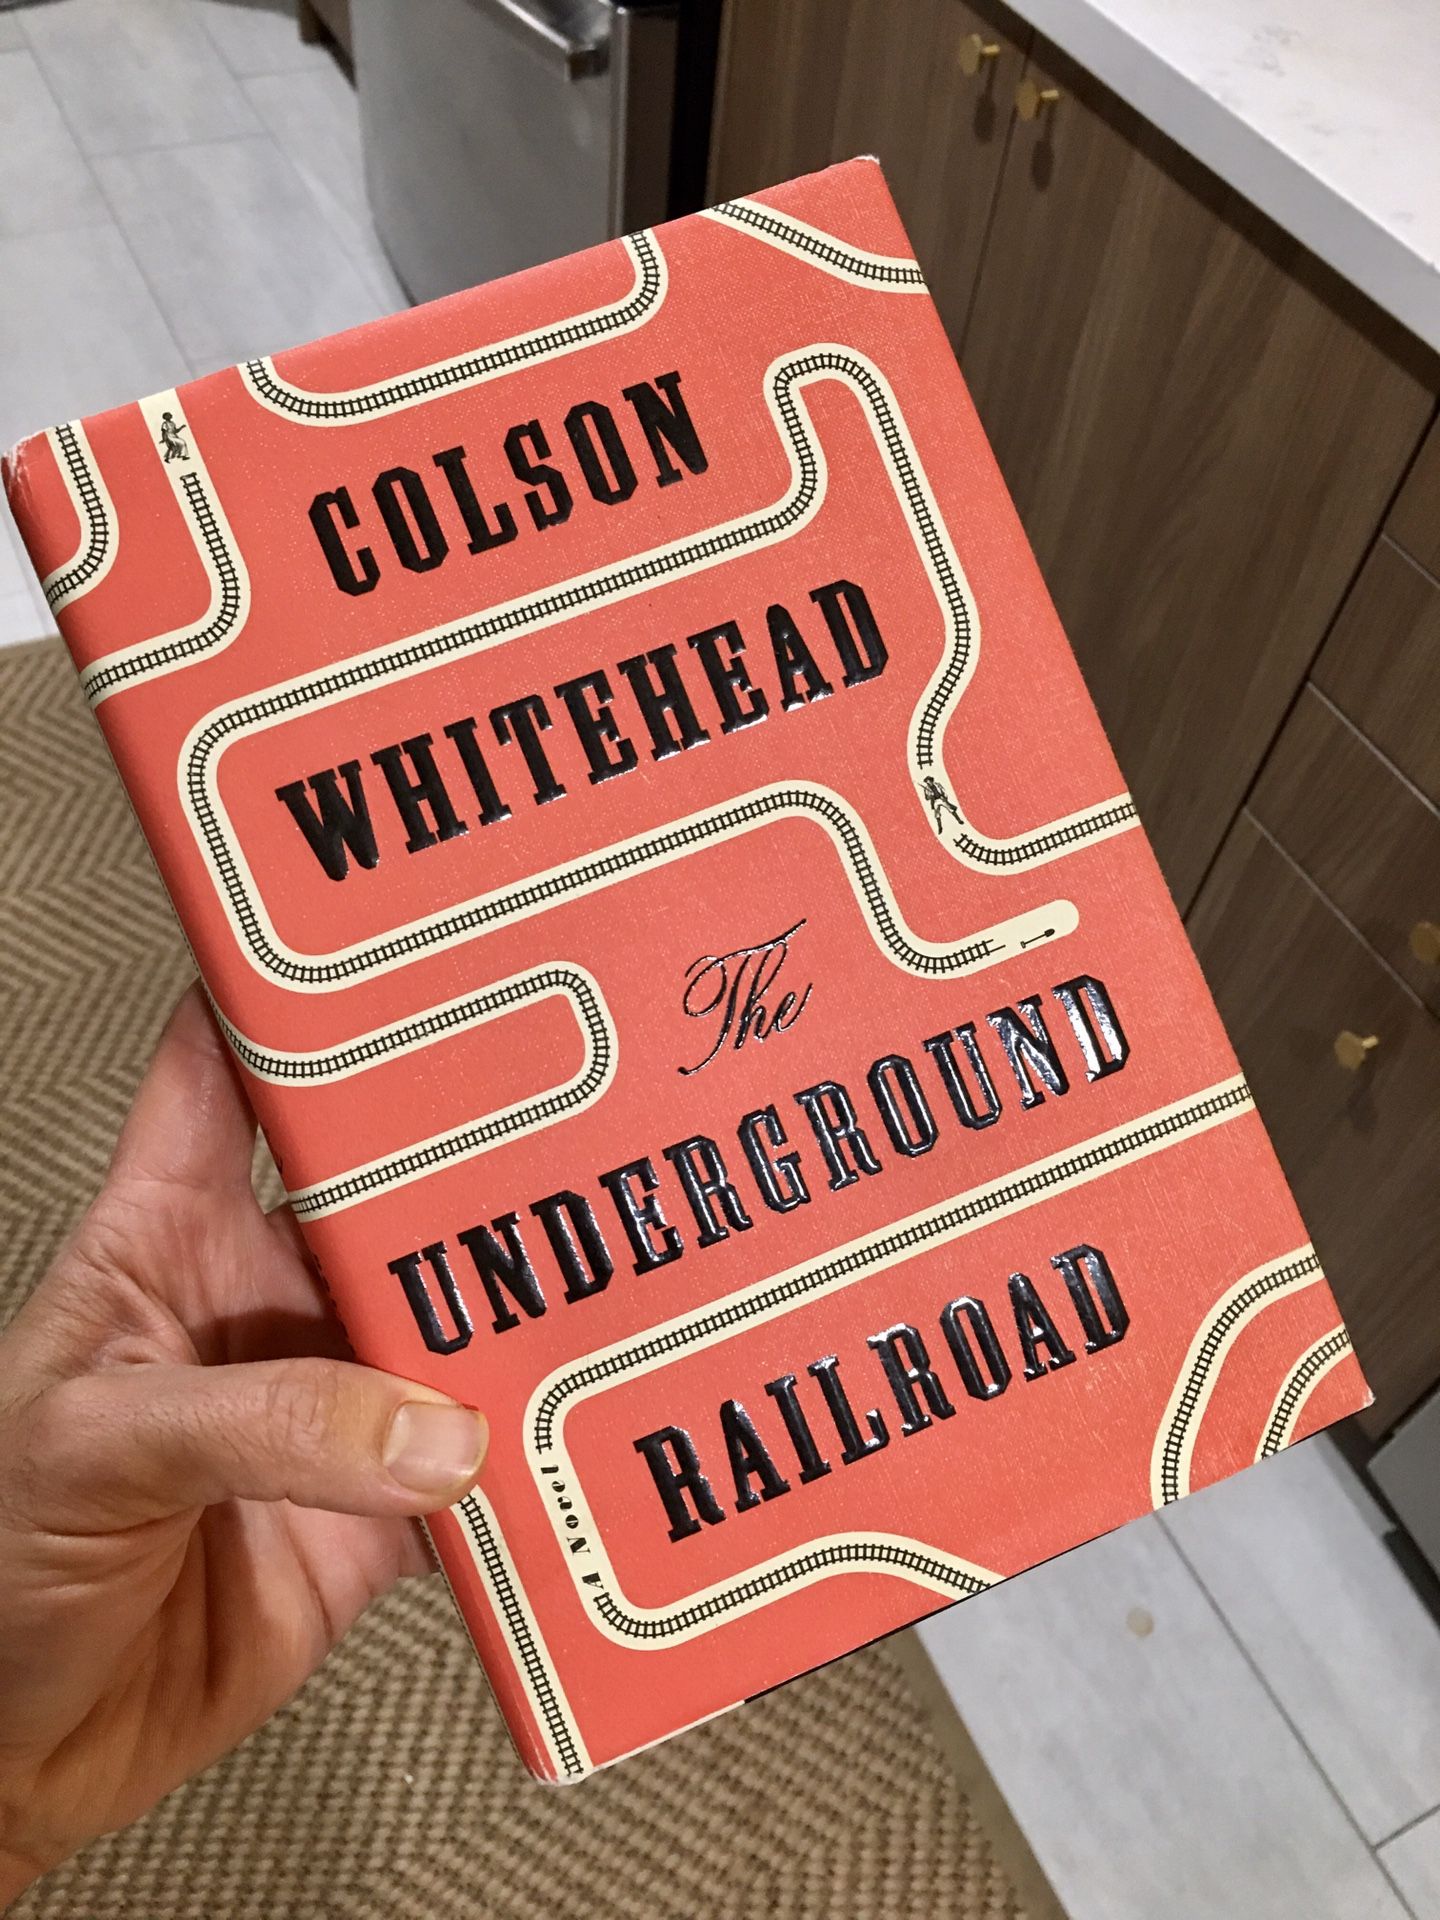 The Underground Railroad (paperback)